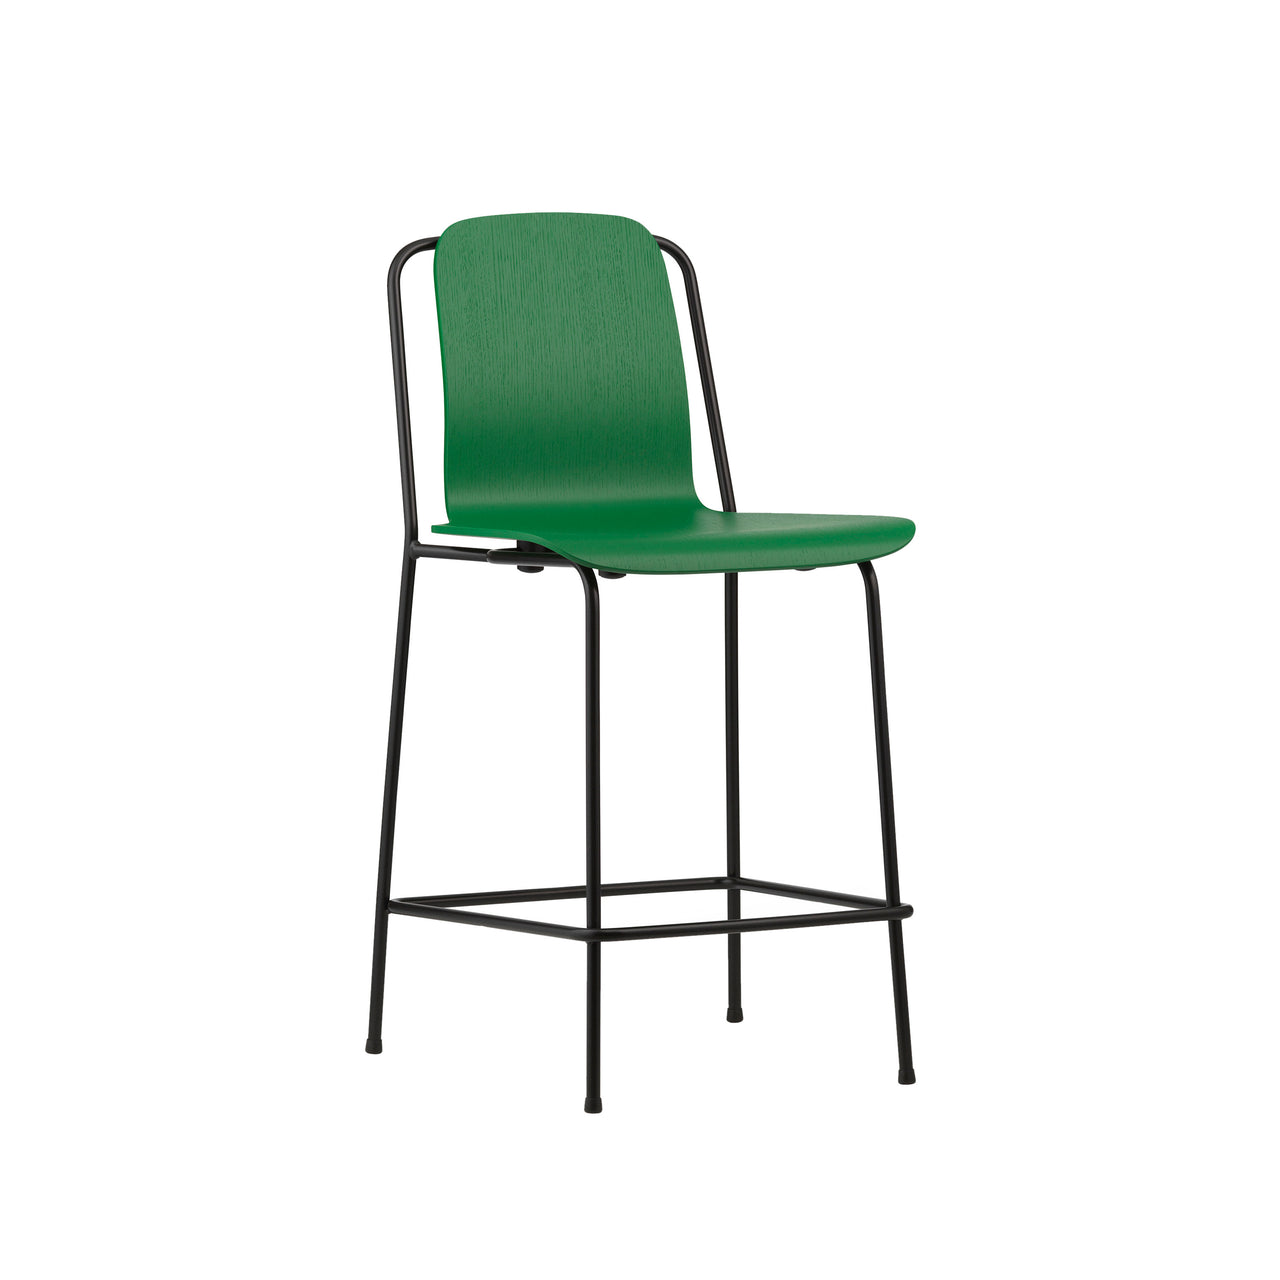 Studio Bar + Counter Chair: Counter + Green